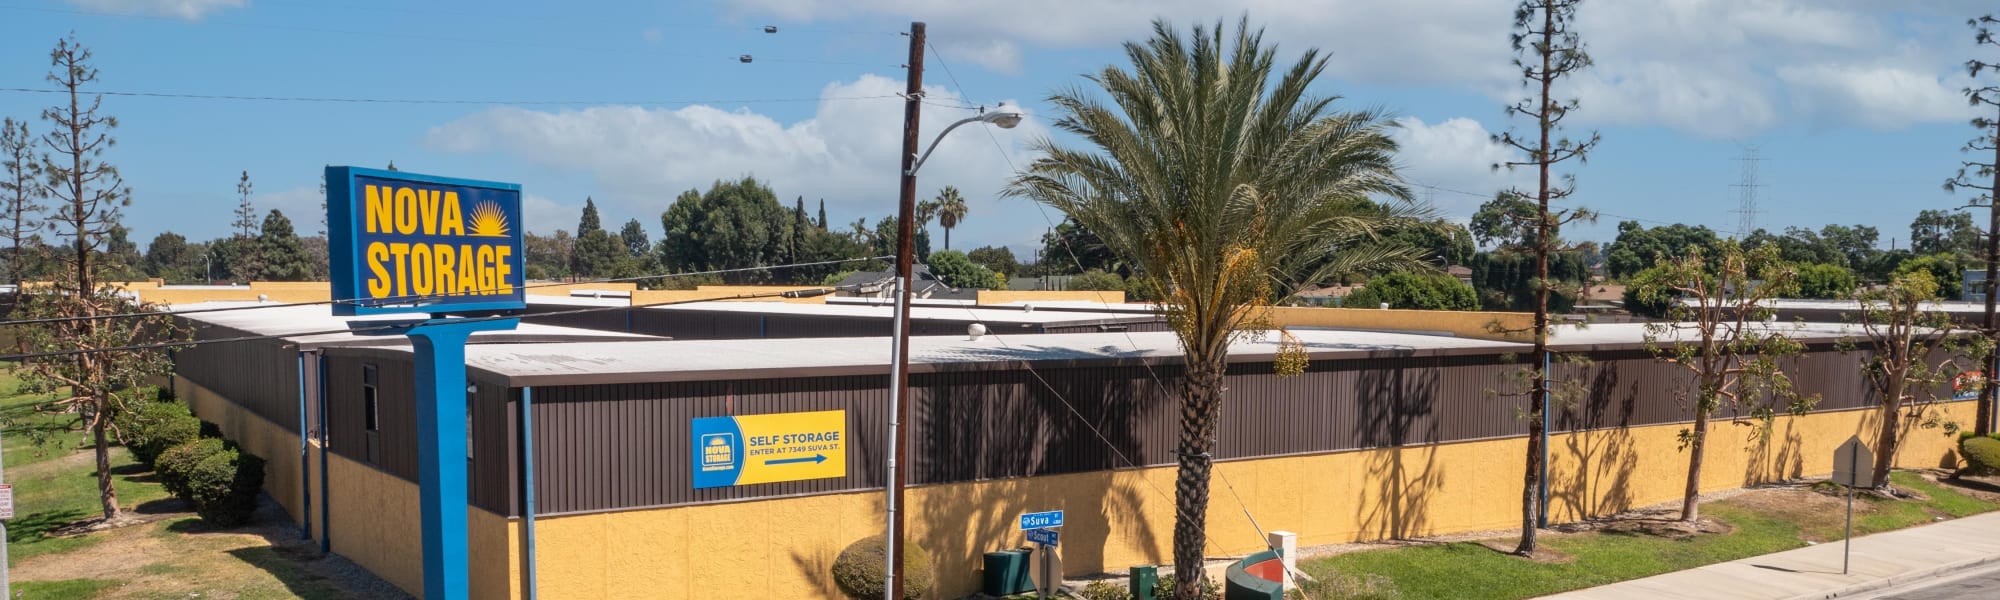 Customer reviews of Nova Storage in Downey, California